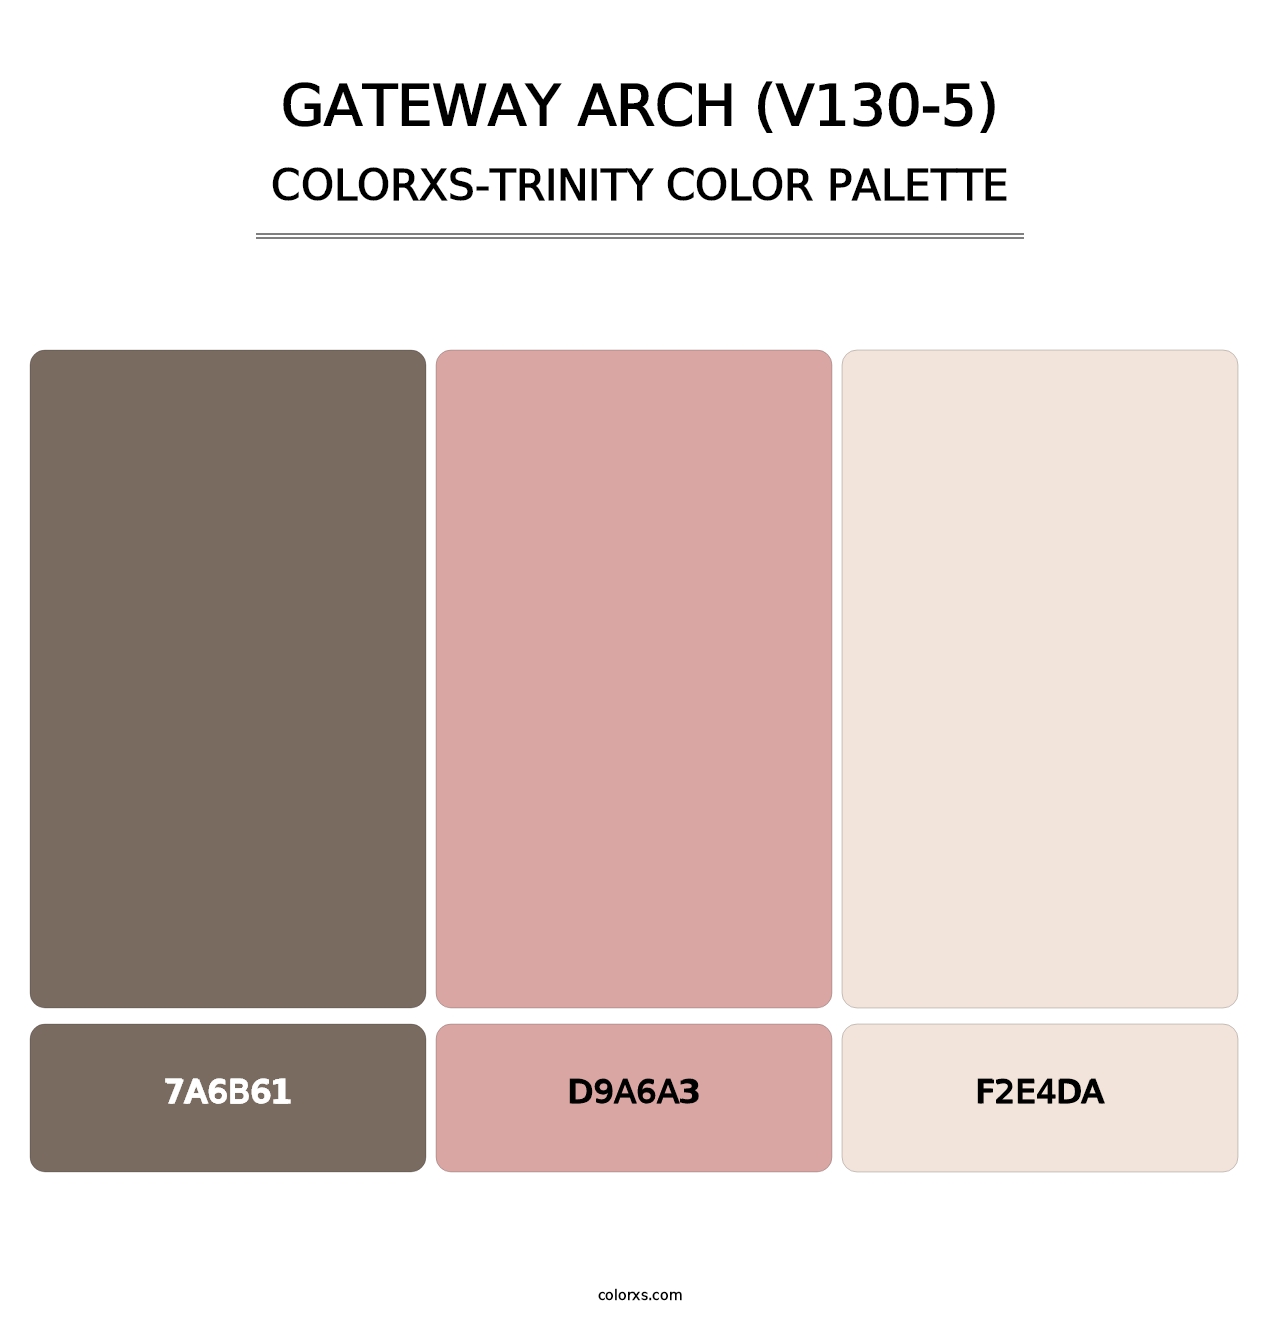 Gateway Arch (V130-5) - Colorxs Trinity Palette